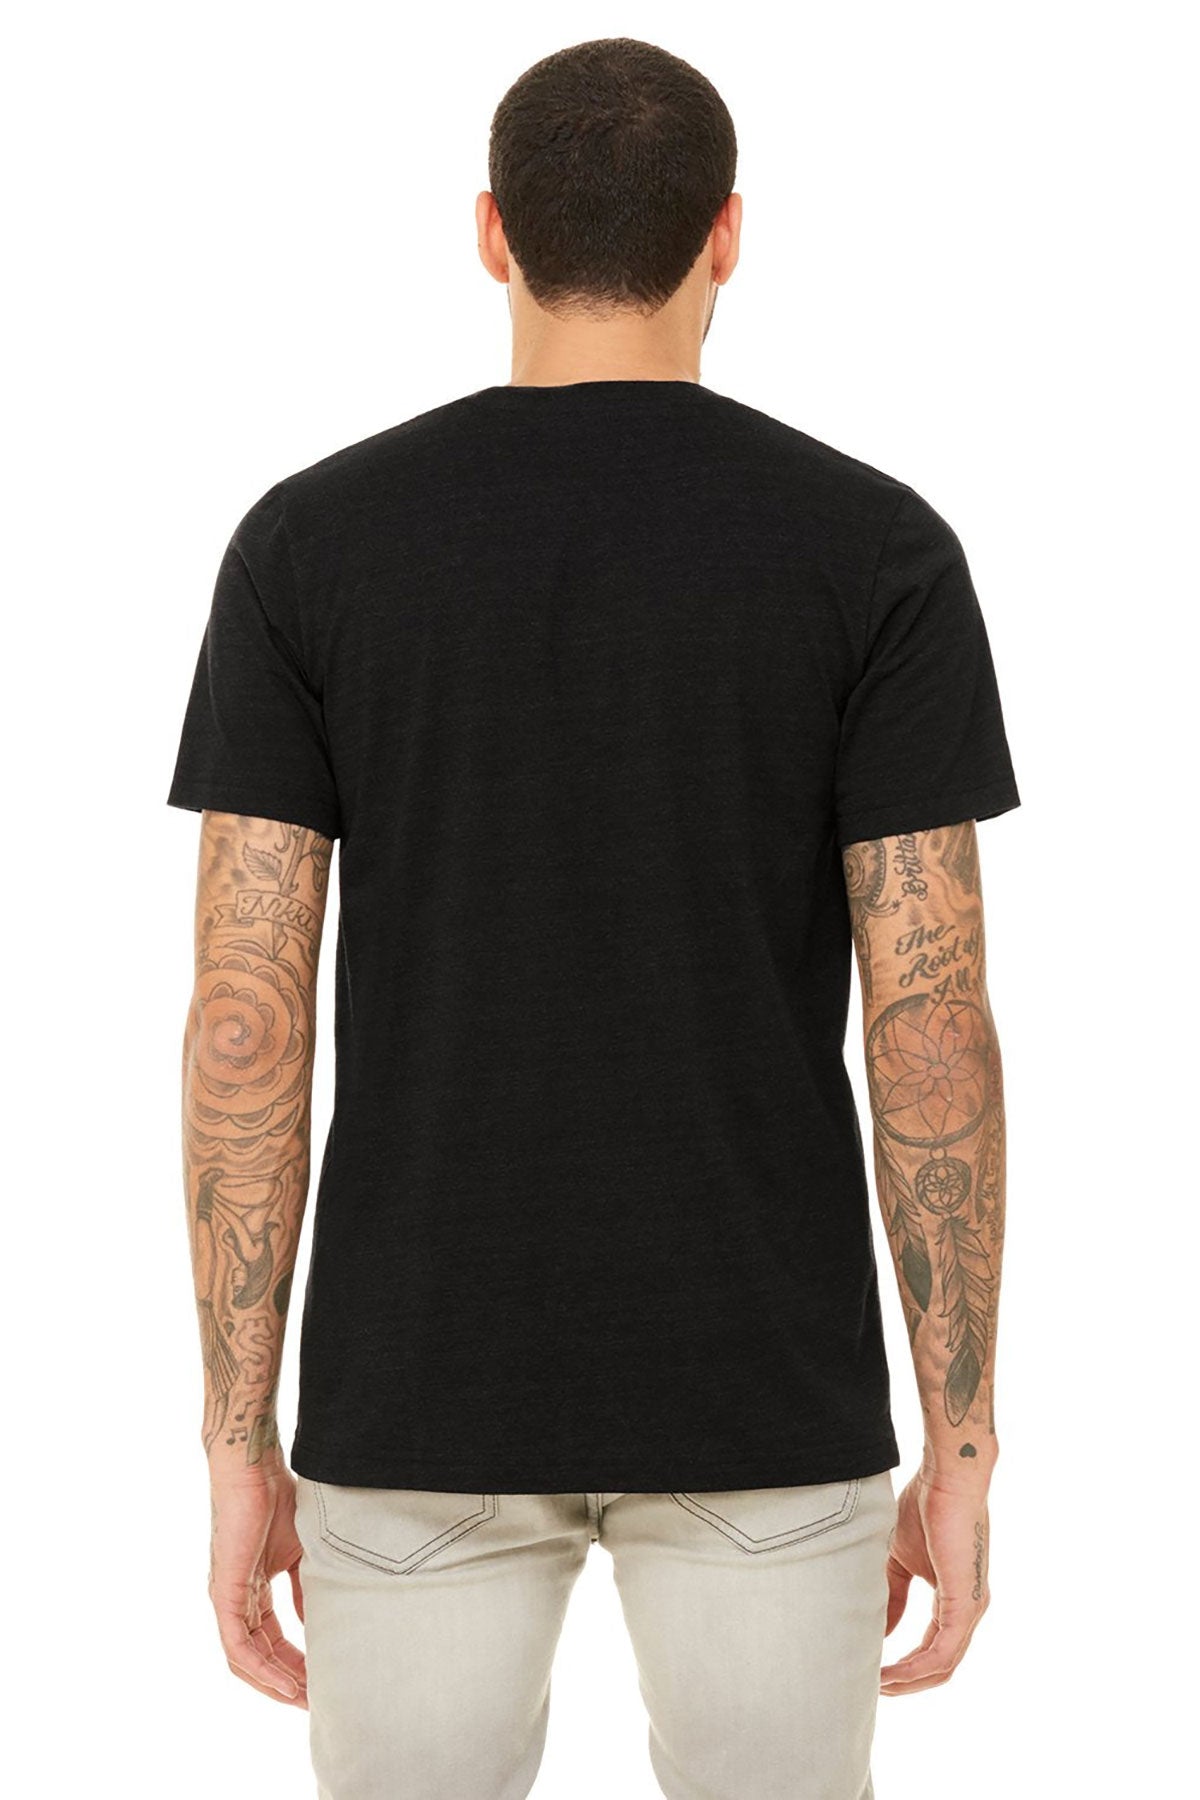 bella + canvas unisex jersey short sleeve t-shirt 3001c black heather